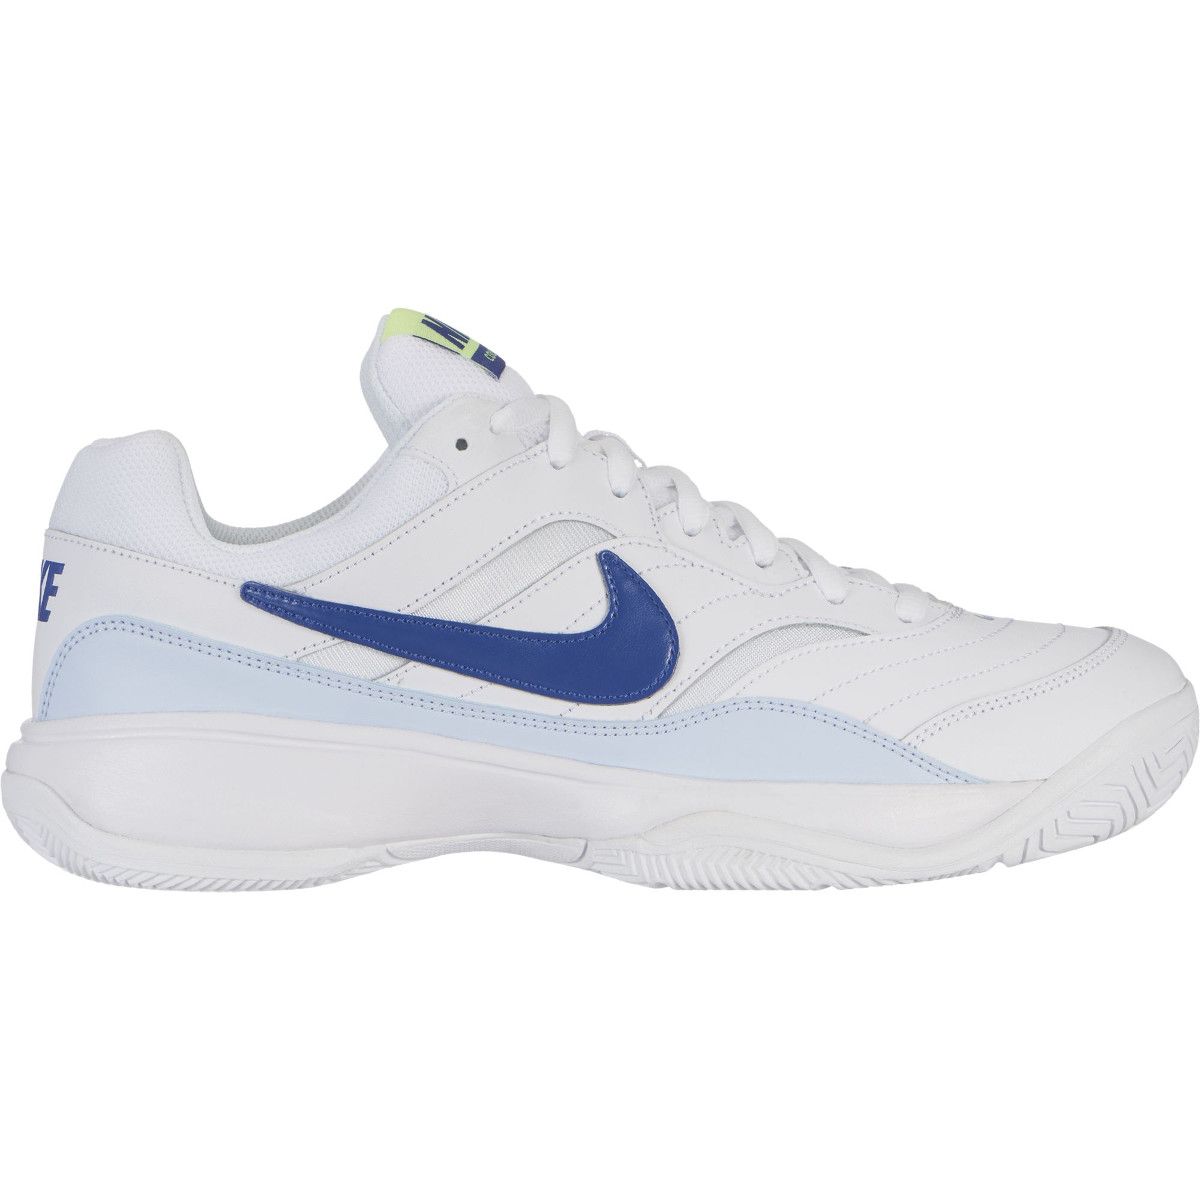 Nike Court Lite Men's Tennis Shoes 845021-108